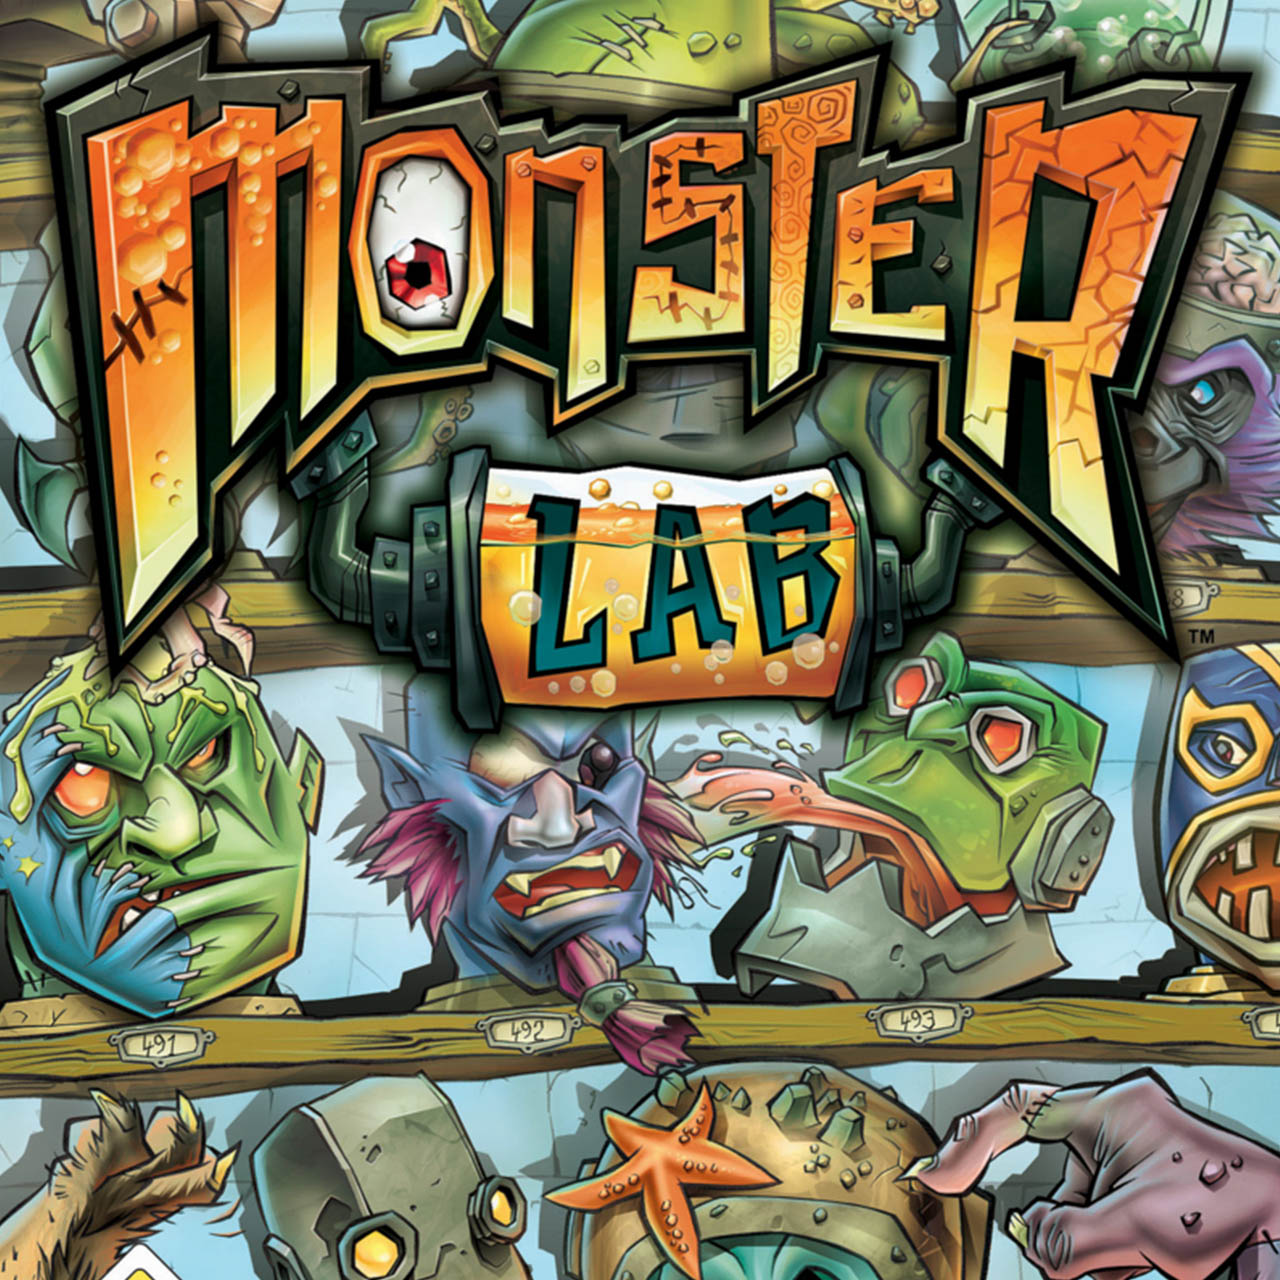 monster lab